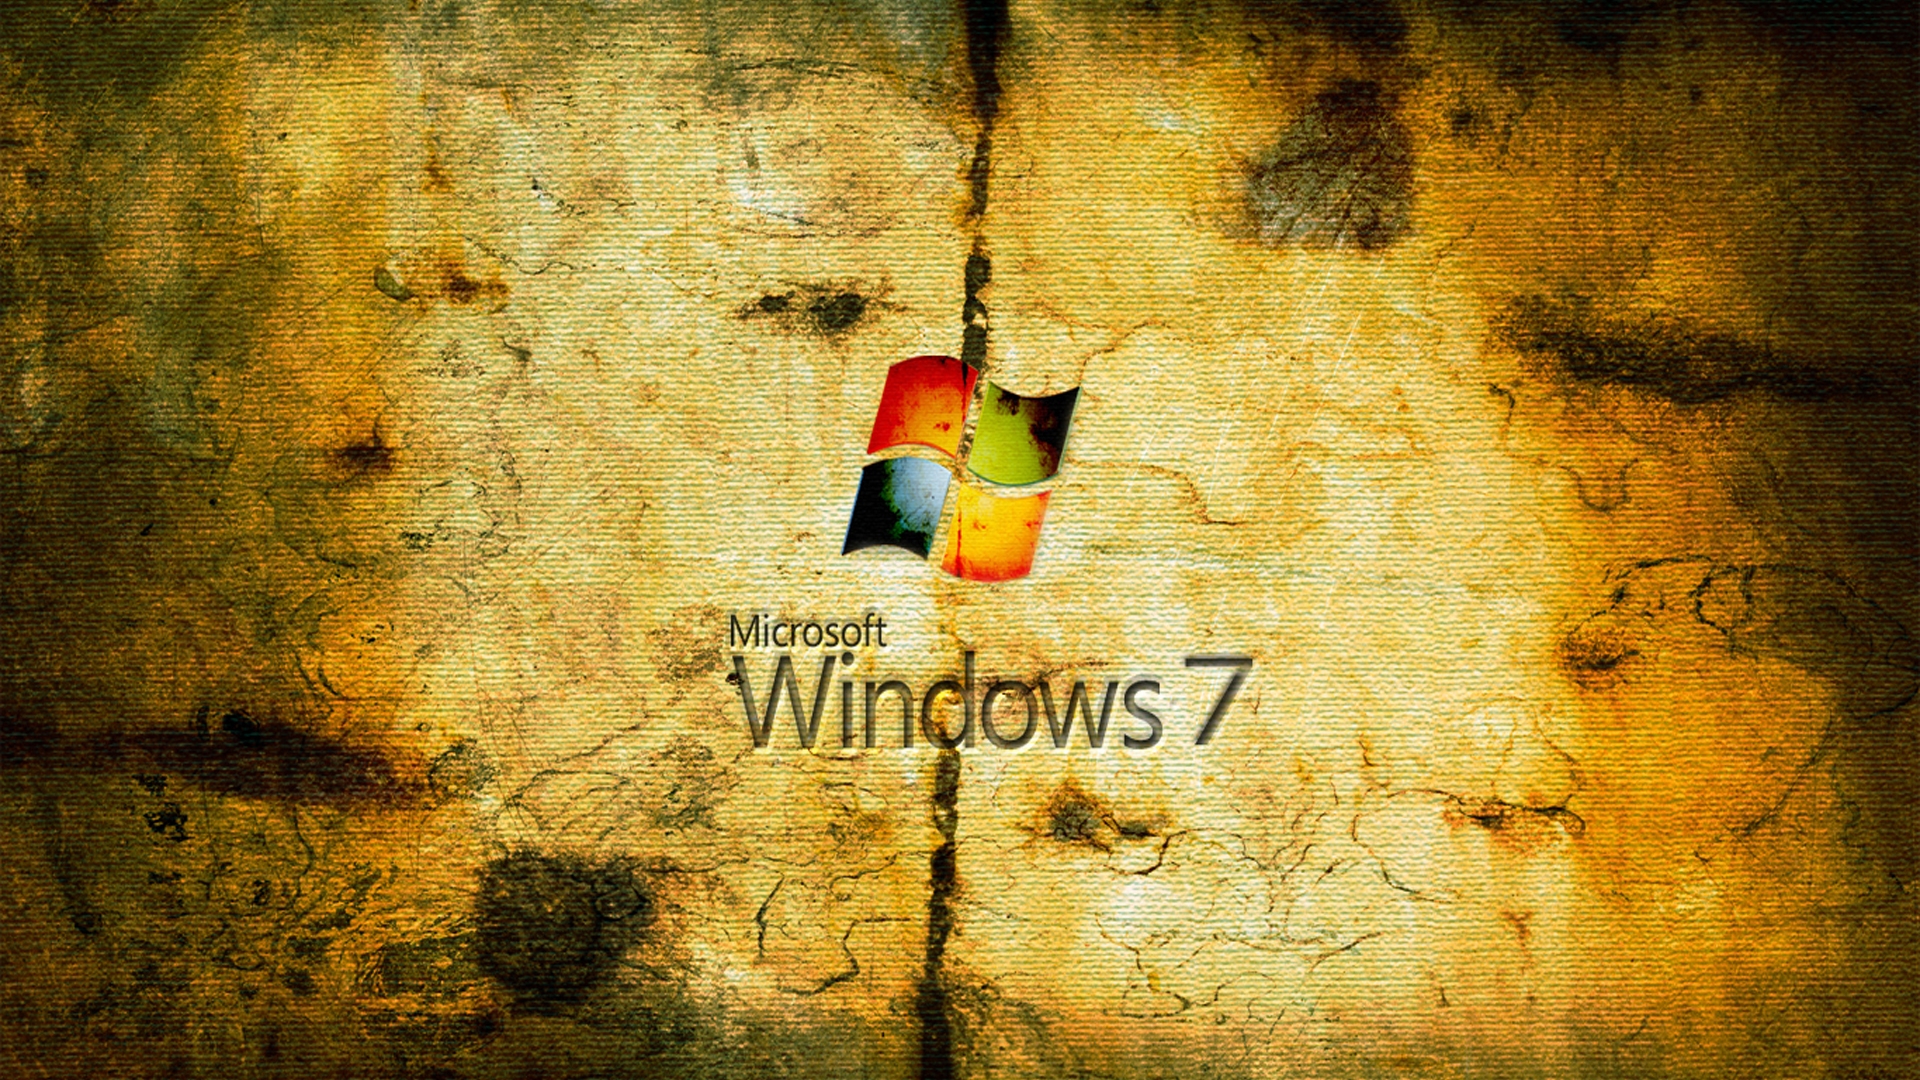 Worn Windows Wallpaper HD